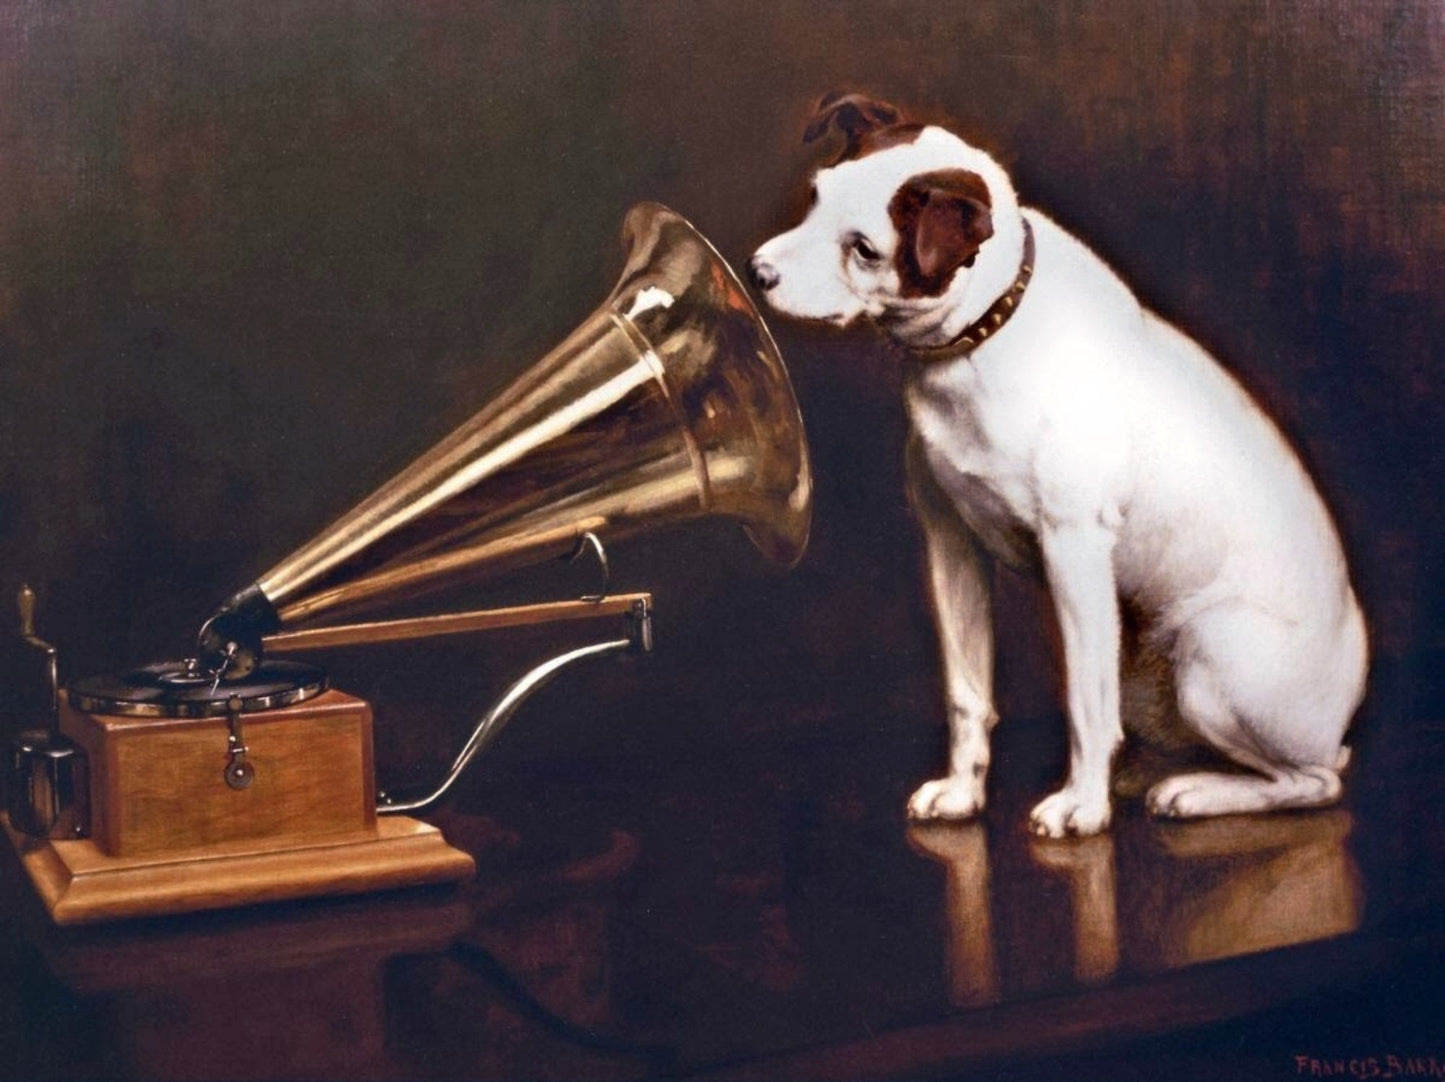 "His masters voice" dog artwork (1890s) | Francis Barraud Posters, Prints, & Visual Artwork The Trumpet Shop   